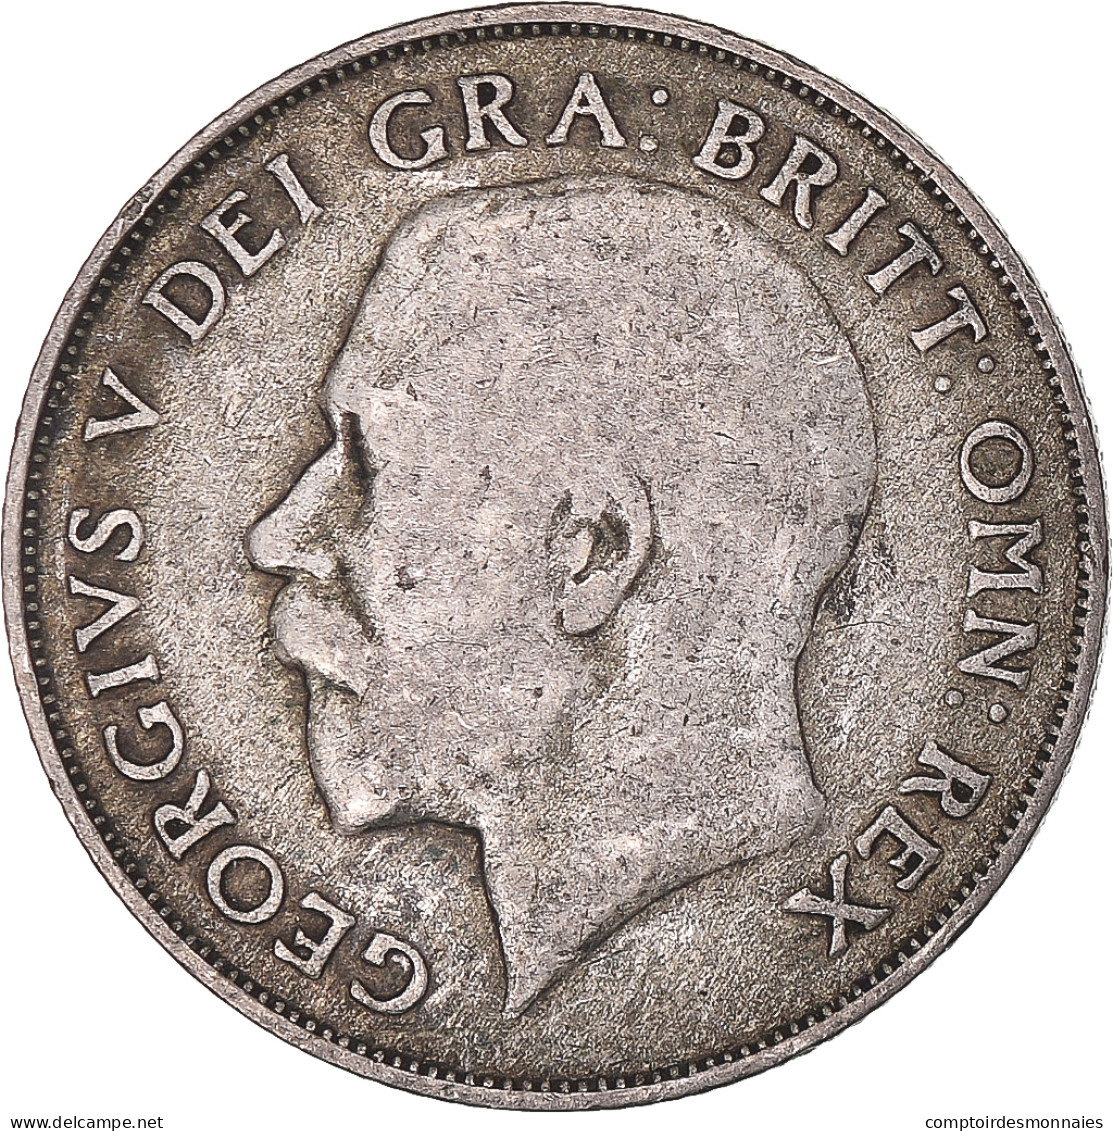 Monnaie, Grande-Bretagne, Shilling, 1922 - J. 1 Florin / 2 Schillings